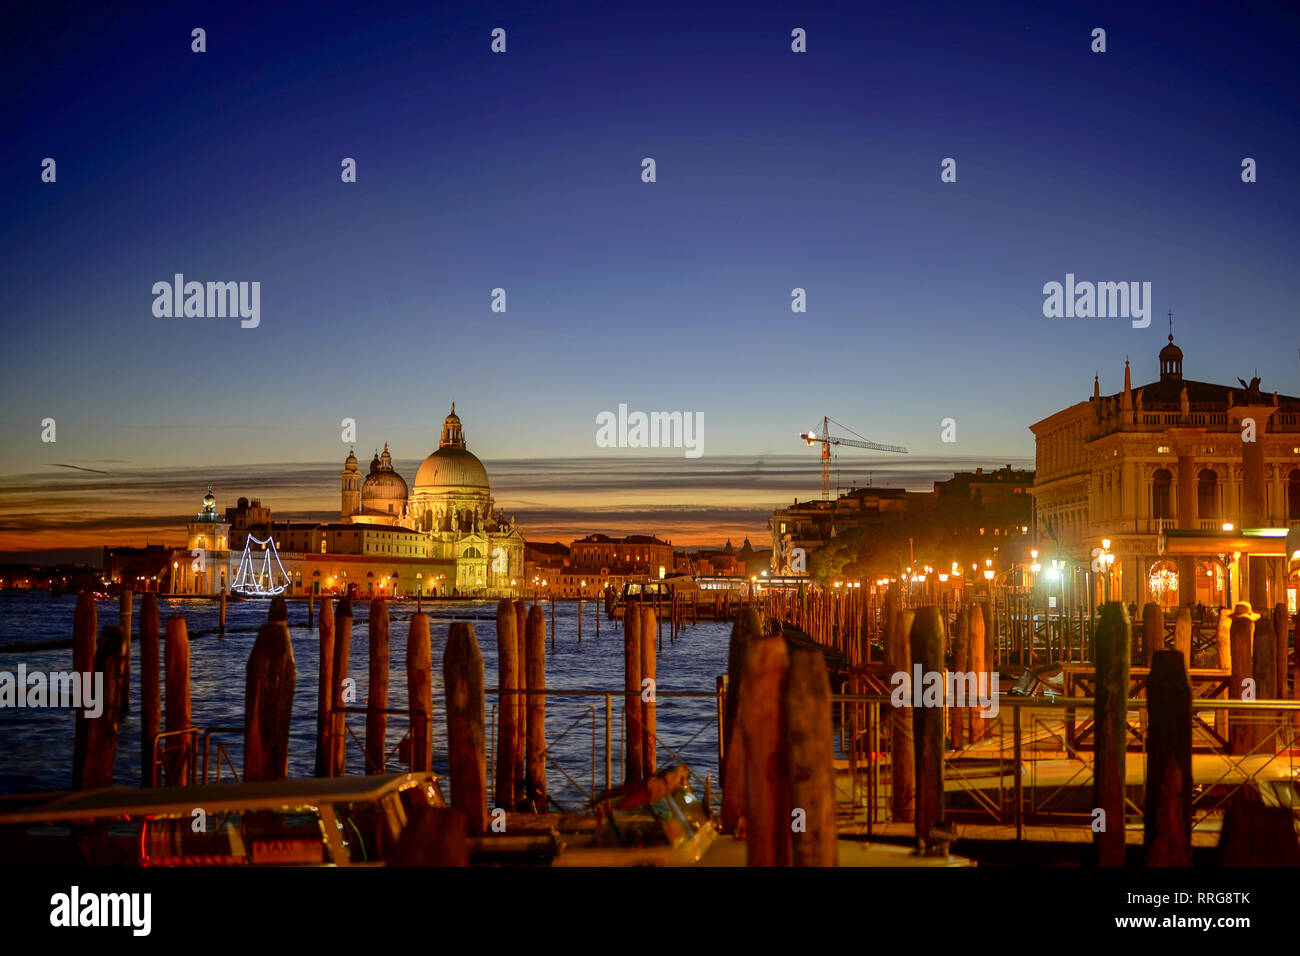 Viste generali di Venezia di notte. Da una serie di foto di viaggio in Italia. Foto Data: martedì 12 febbraio, 2019. Foto: Roger Garfield/Alamy Foto Stock